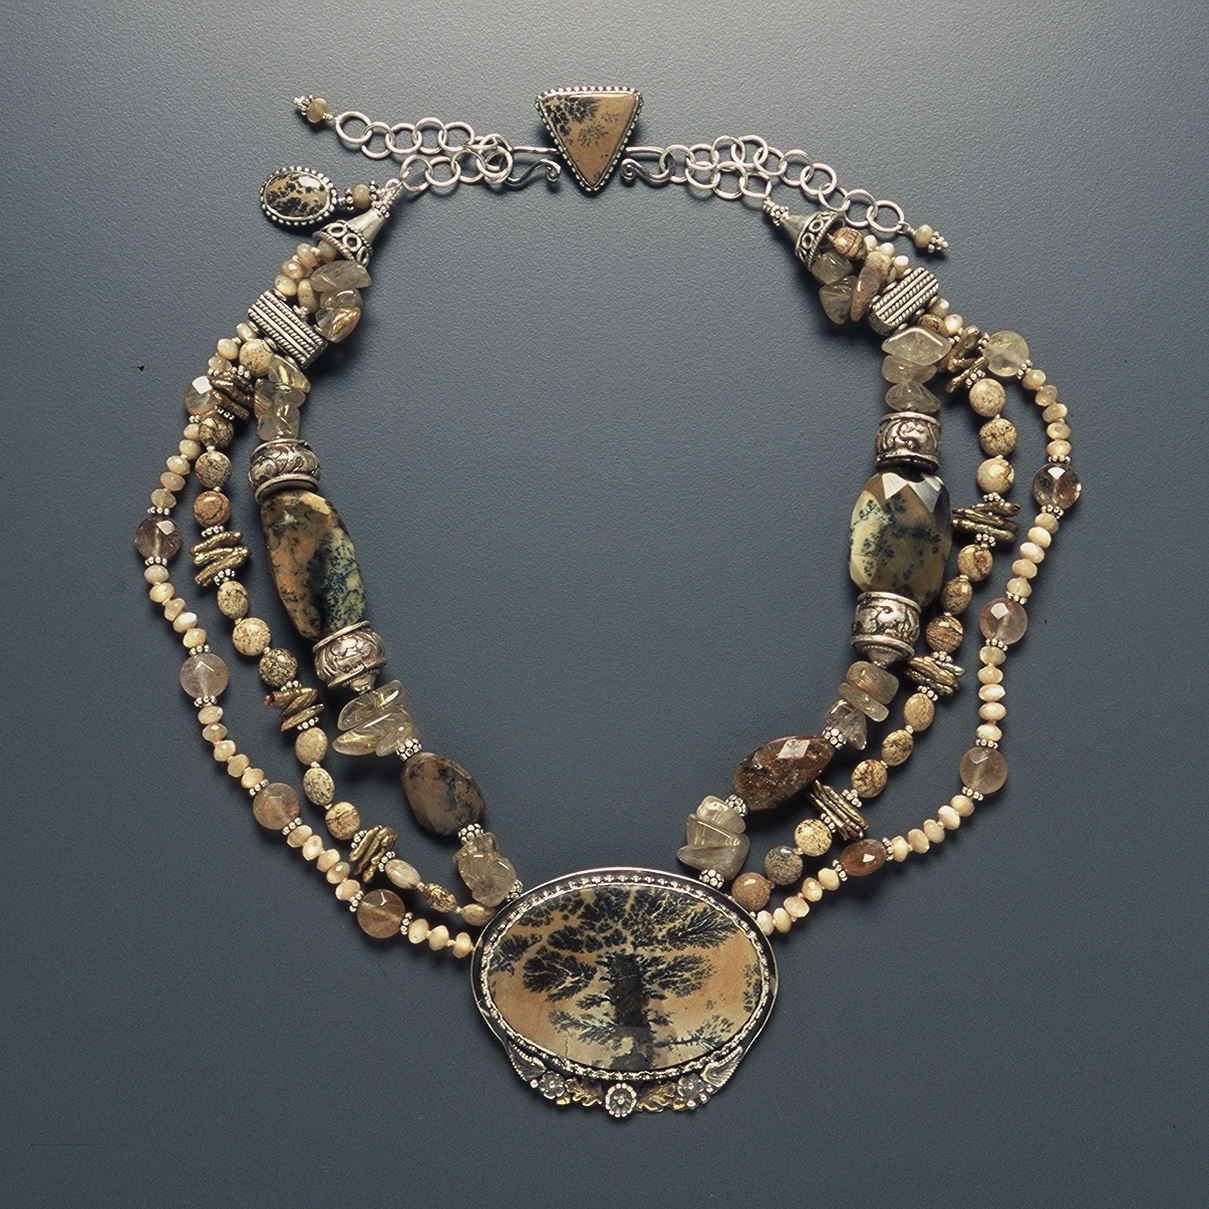 Detail of San Blas Necklace